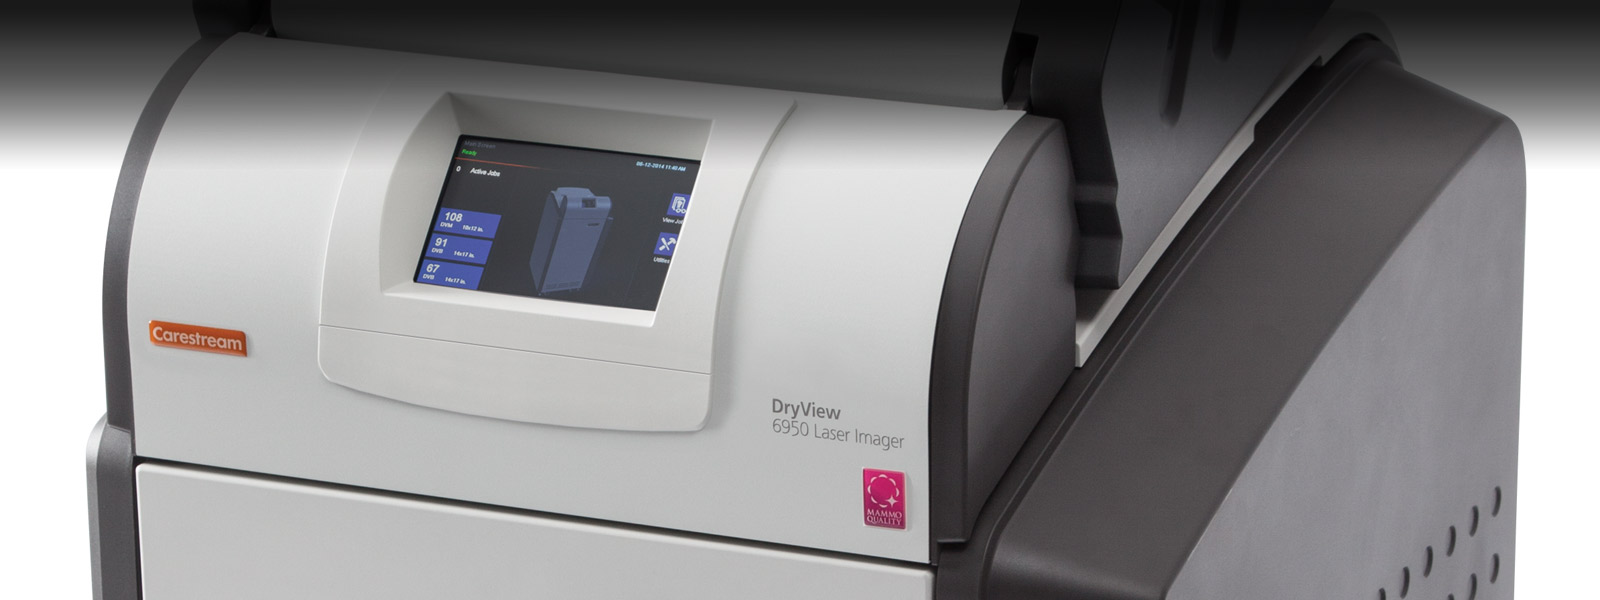 Impresora láser DRYVIEW 6950 de Carestream